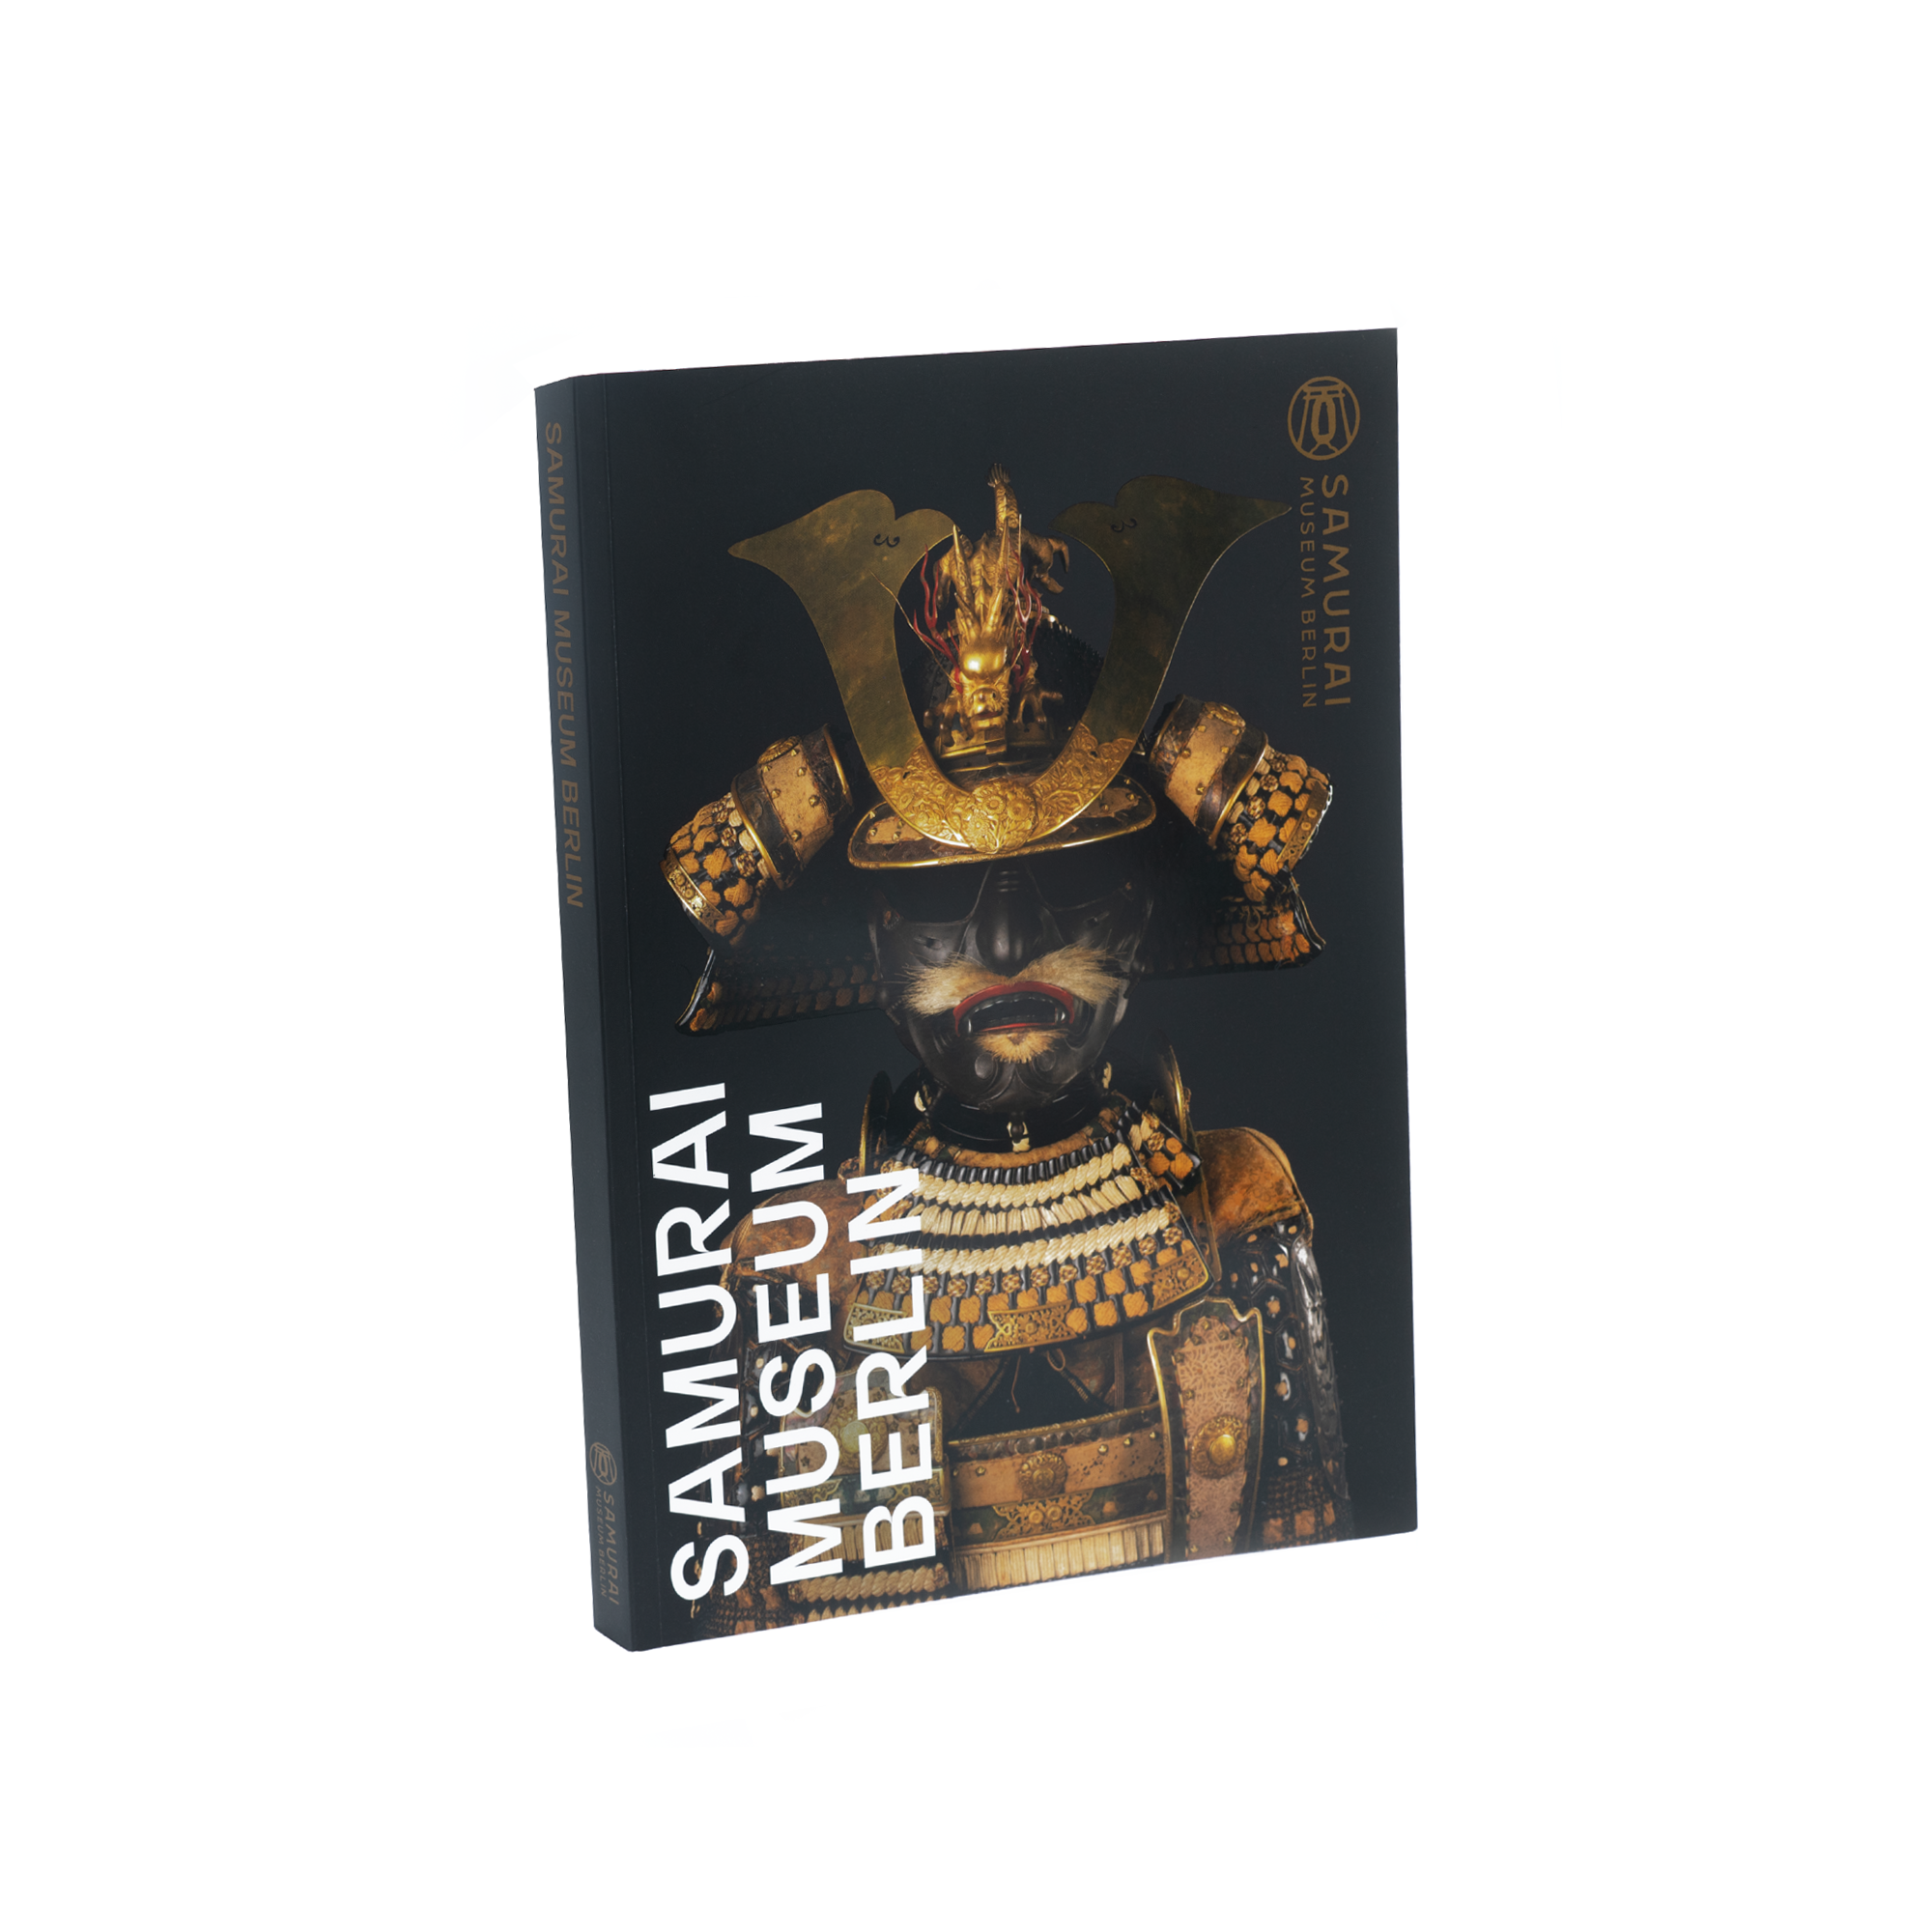 Katalog: "Samurai Museum Berlin"